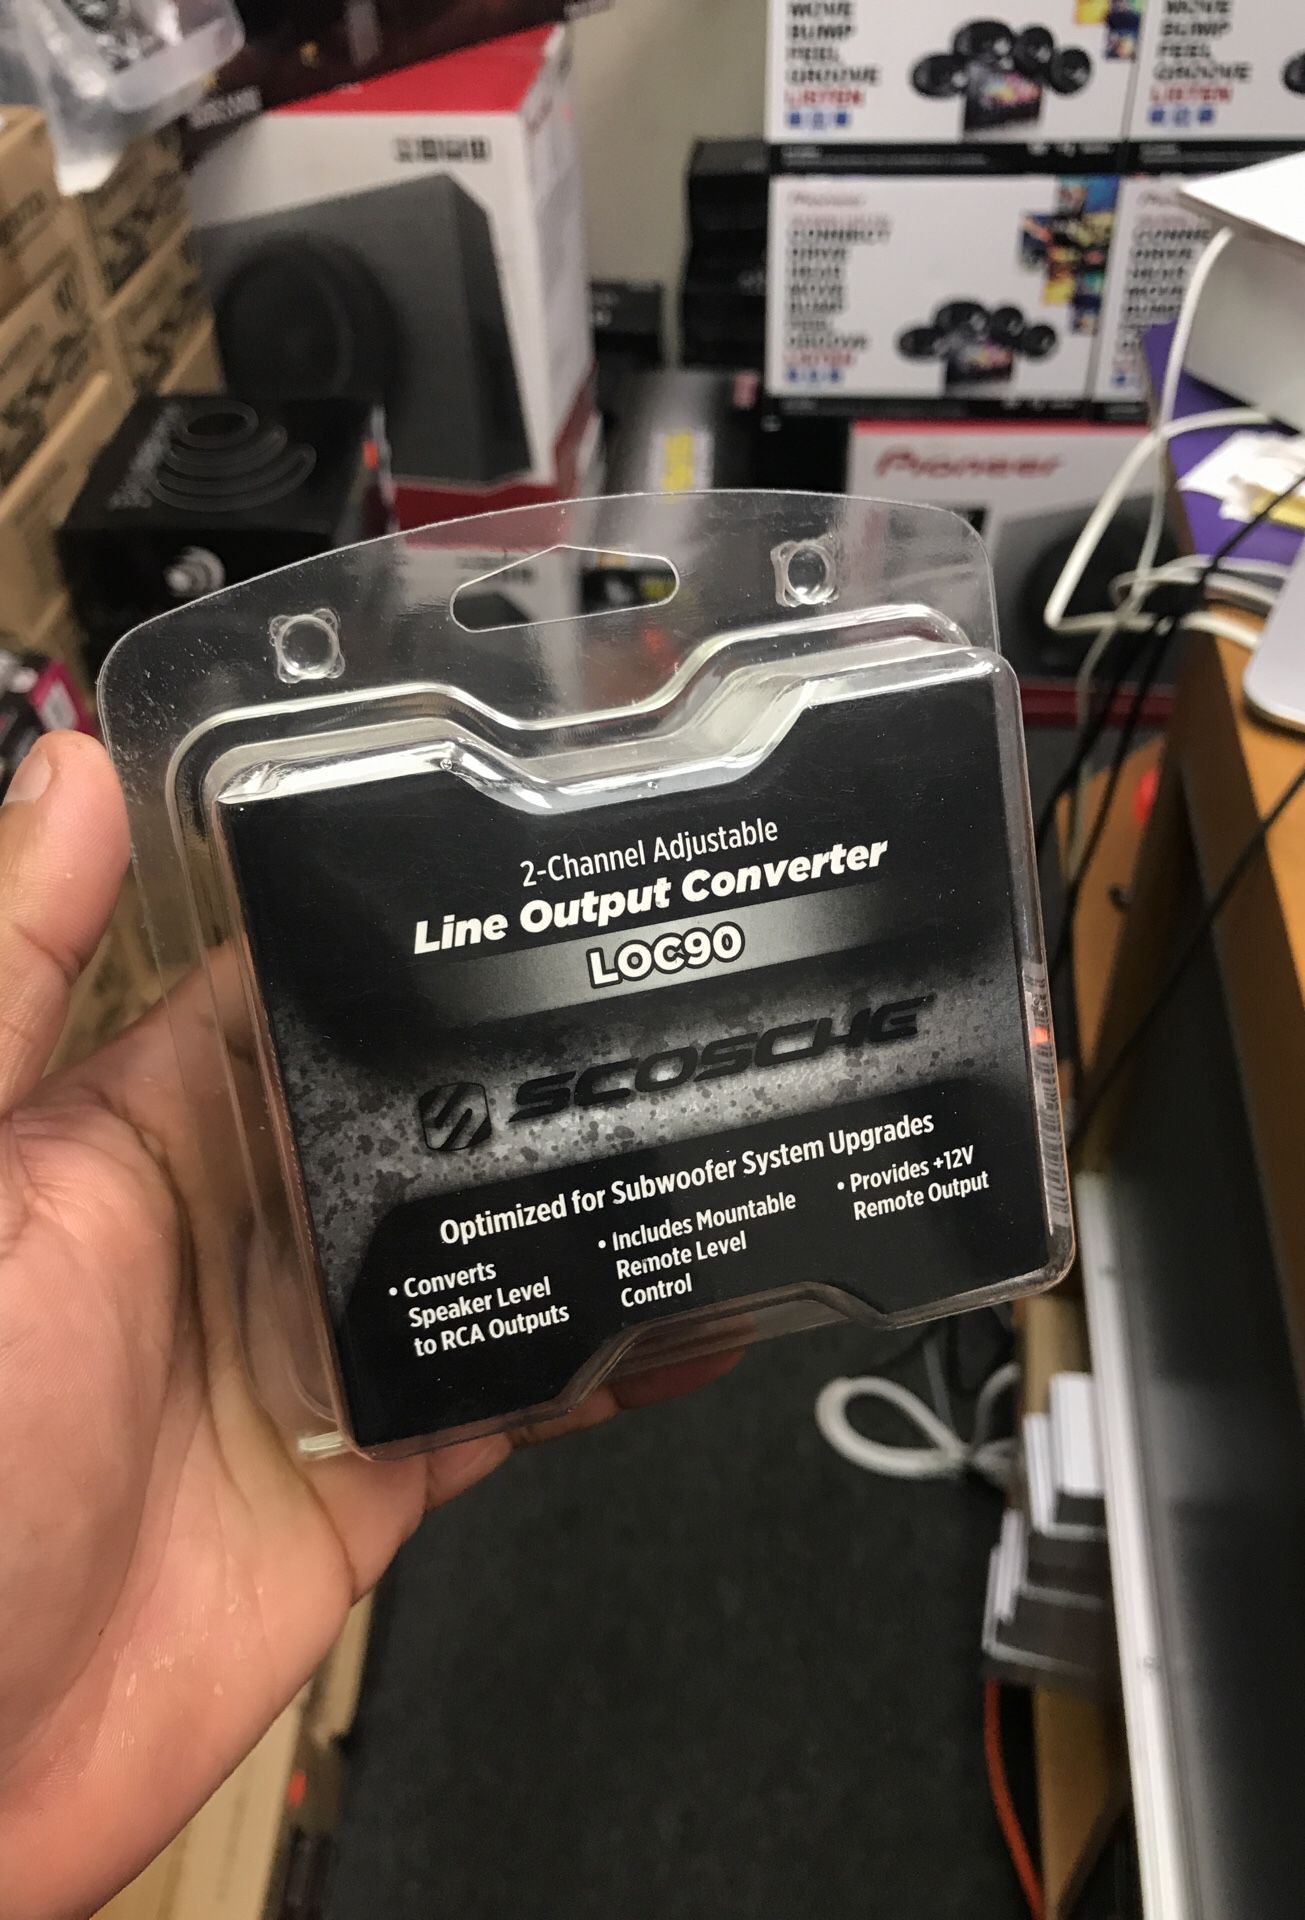 Line output converter